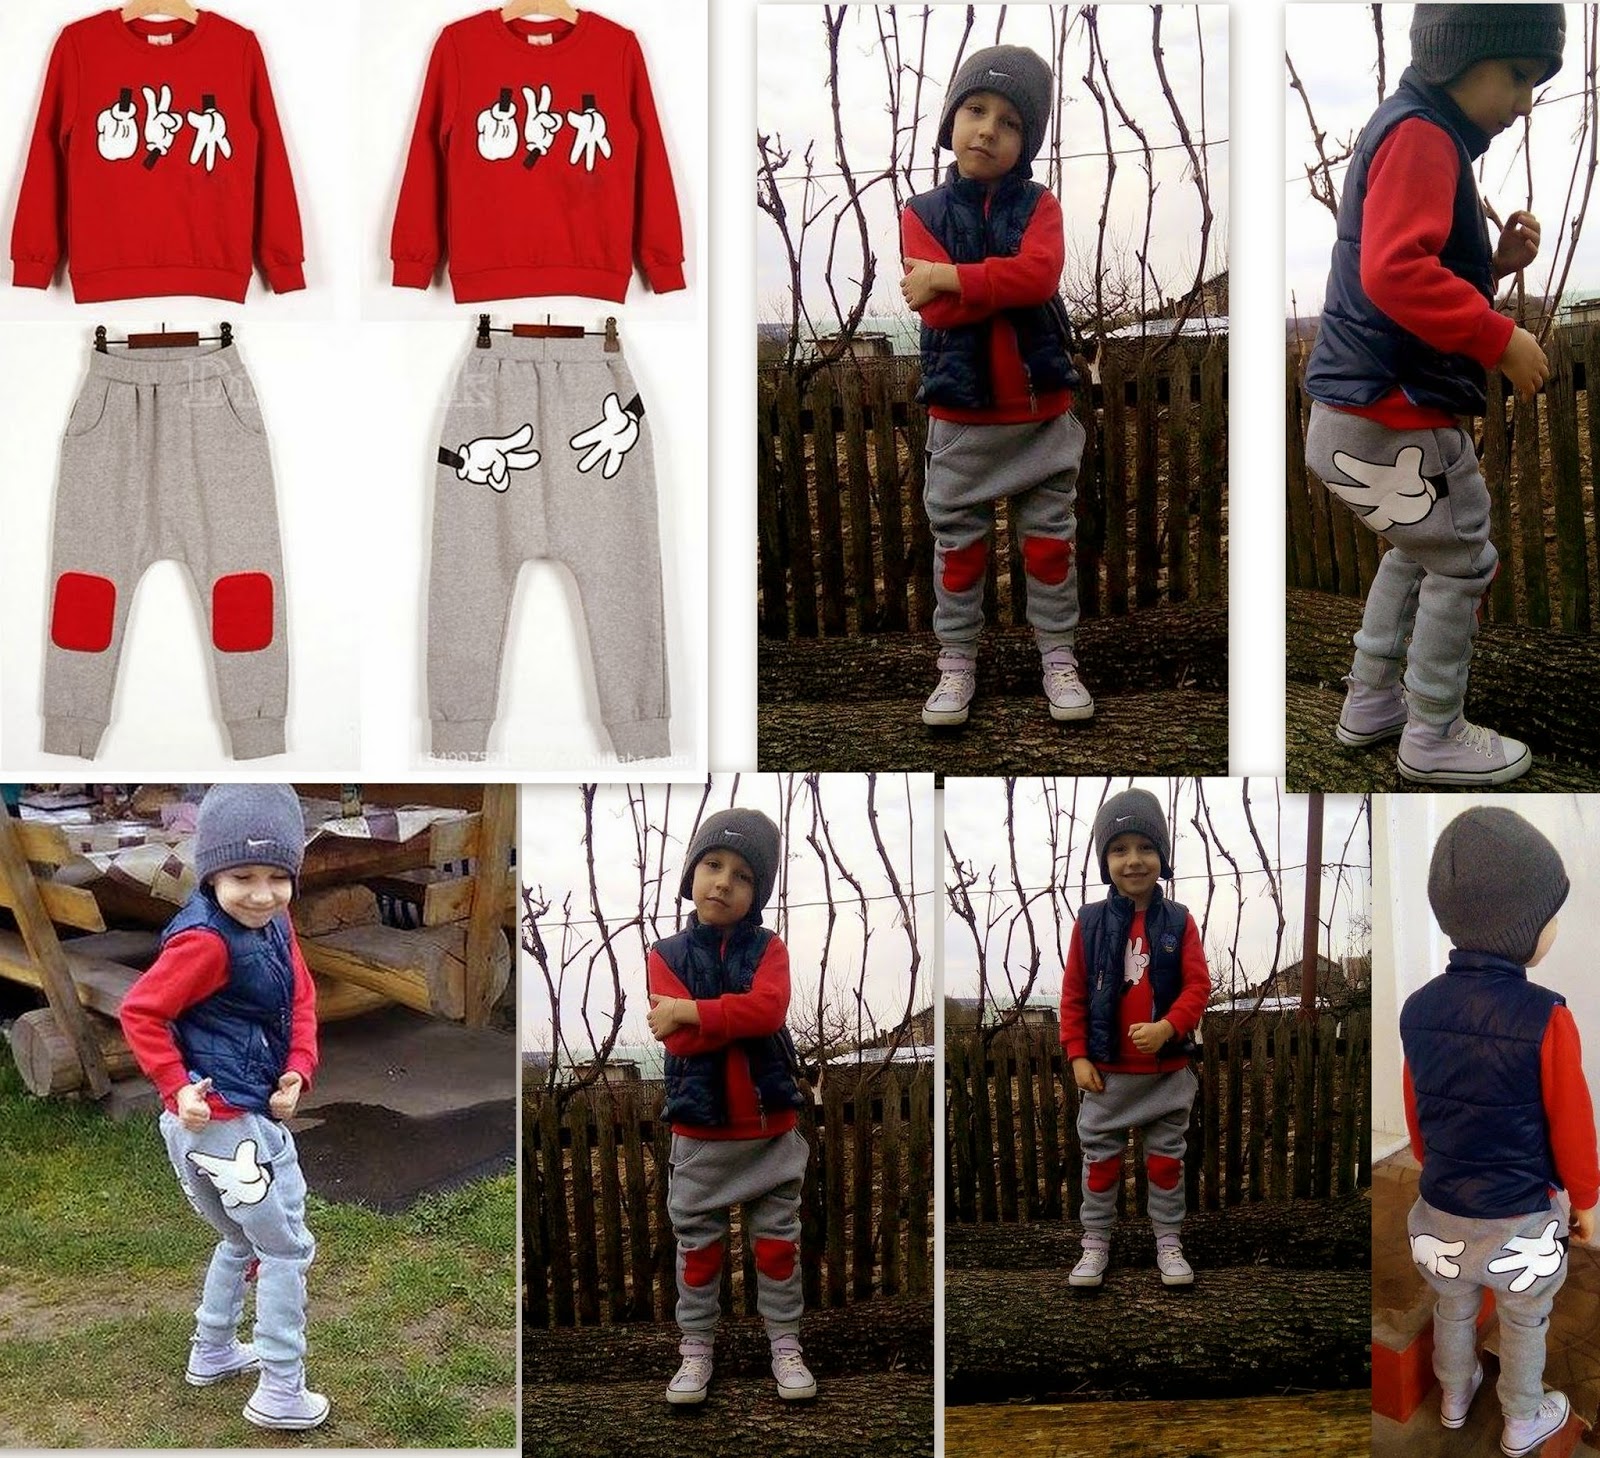 http://www.dresslink.com/2pcs-nwt-vaenait-baby-boys-toddler-kids-boy-finger-top-tshirtspants-outfit-p-13353.html?utm_source=blog&utm_medium=banner&utm_campaign=lendy163